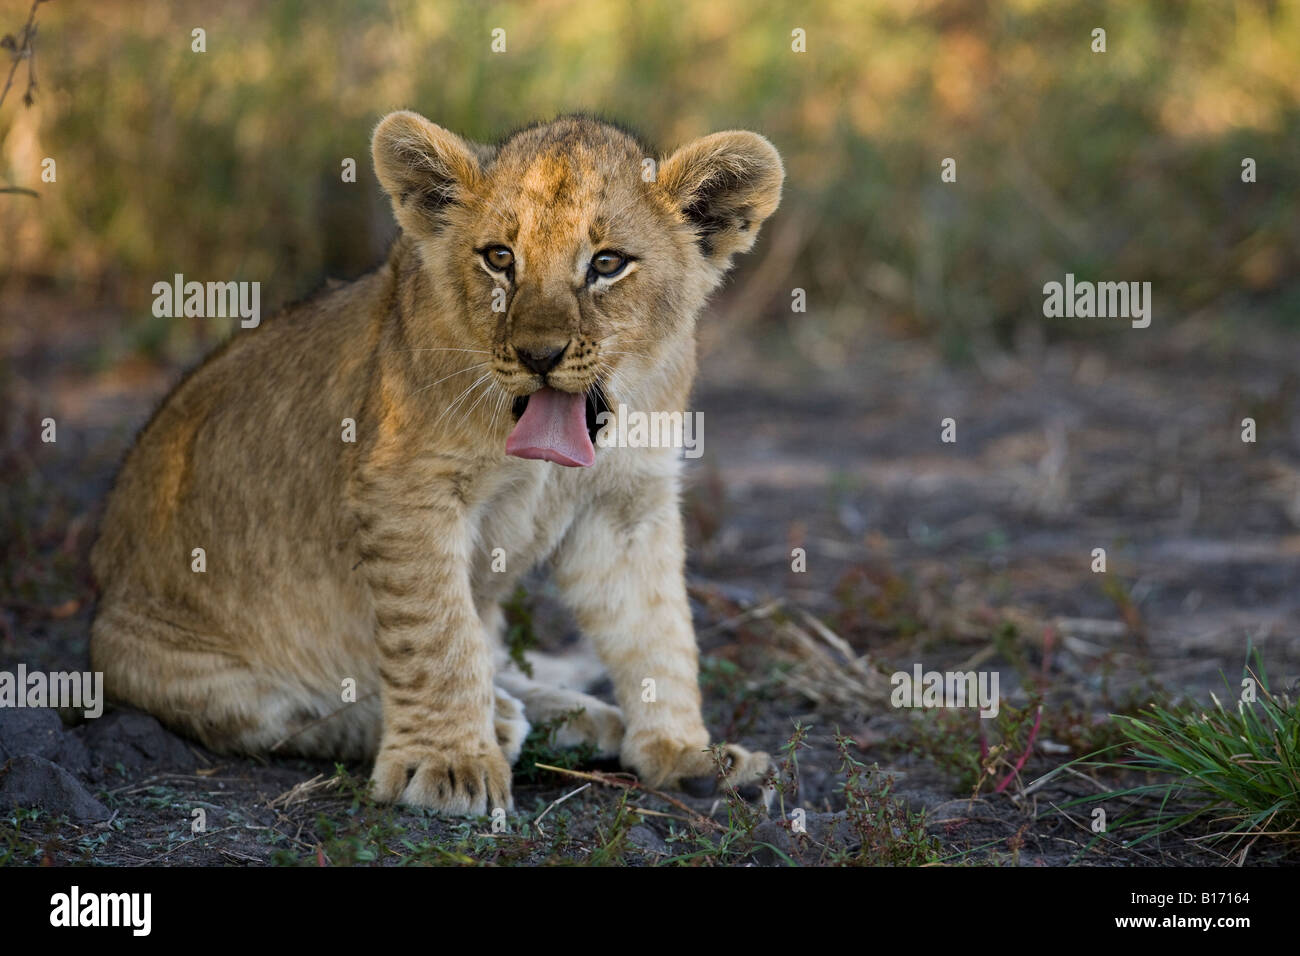 Closeup funny bright eyed baby lion cub sticking its tongue out face in warm sunlight, natural habitat Moremi Okavango Delta Botswana Stock Photo